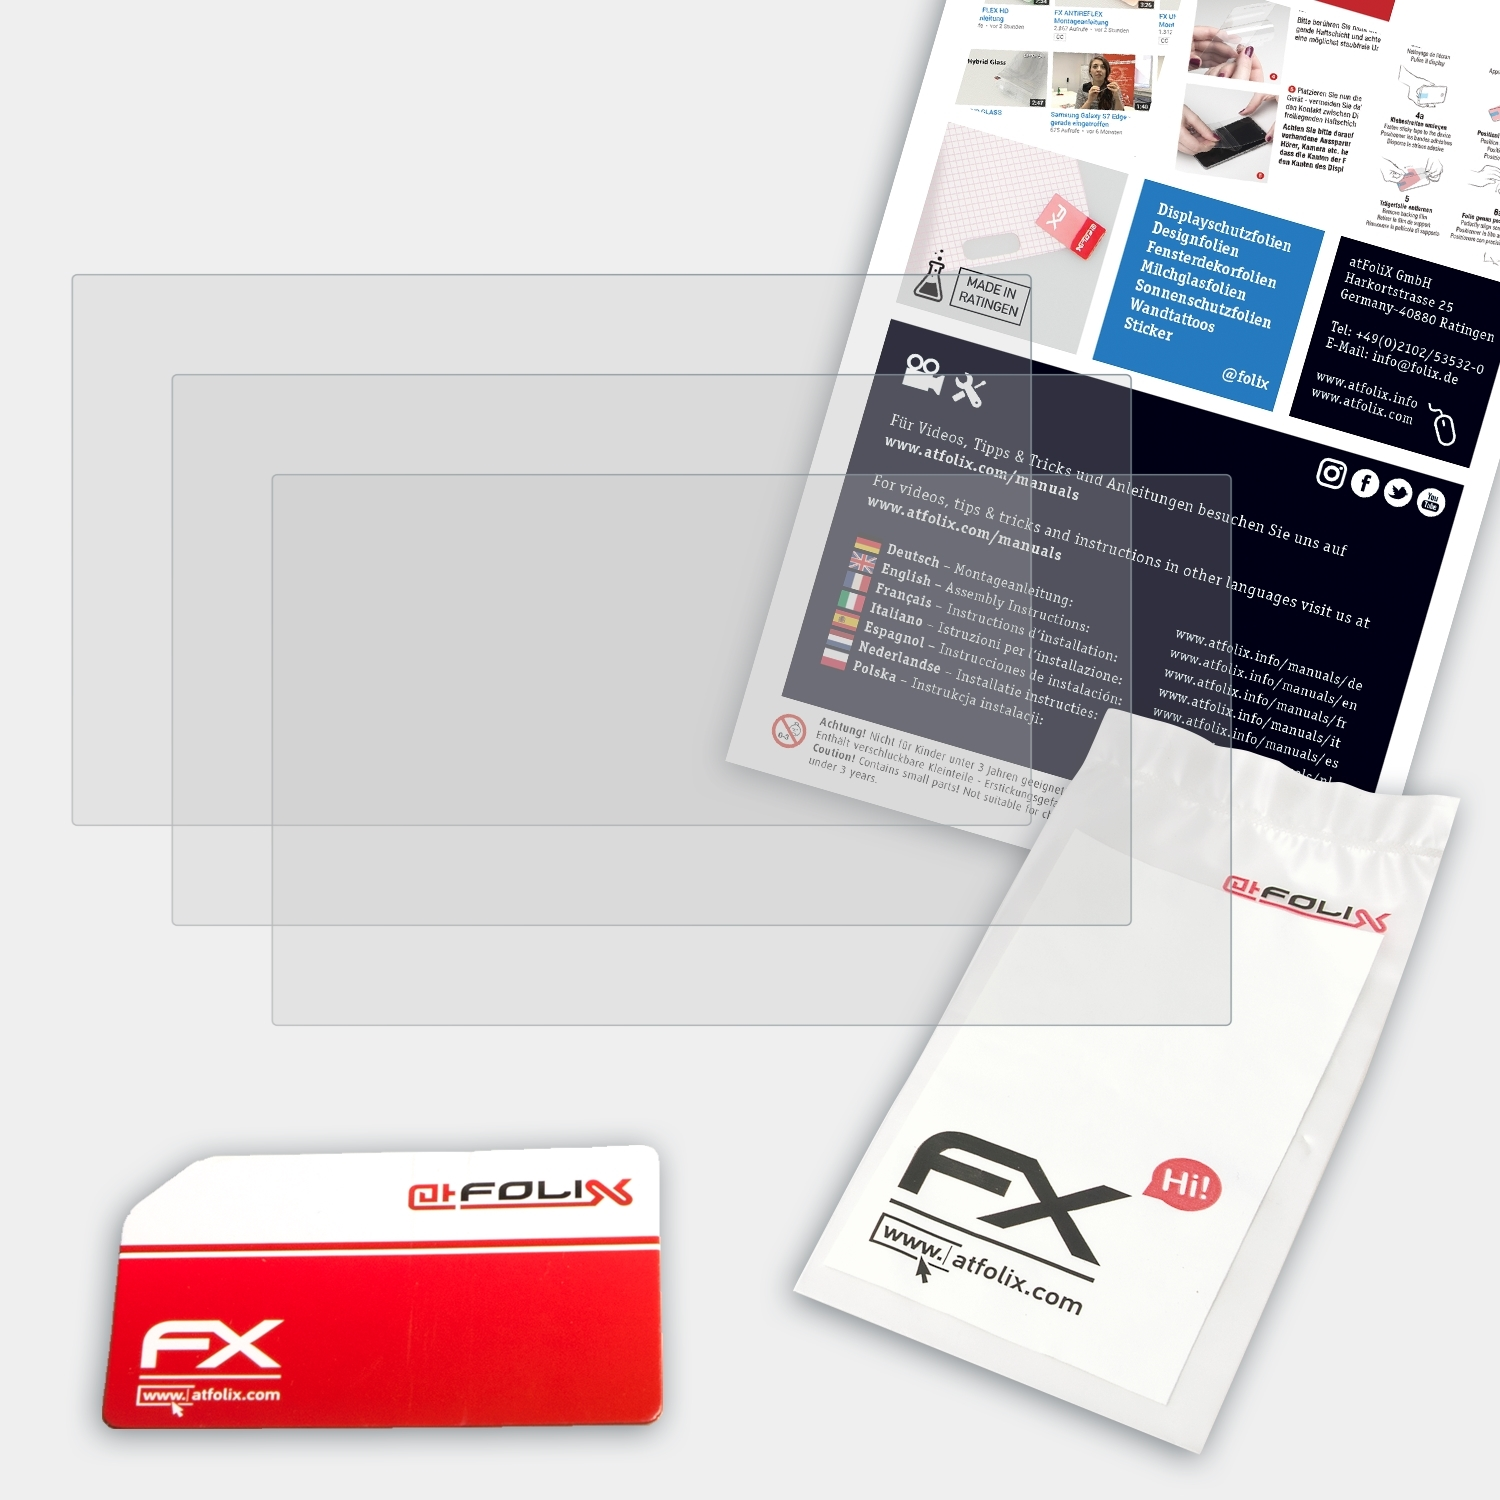 ATFOLIX 3x Displayschutz(für E1004) PSP-E1000 Sony FX-Antireflex 